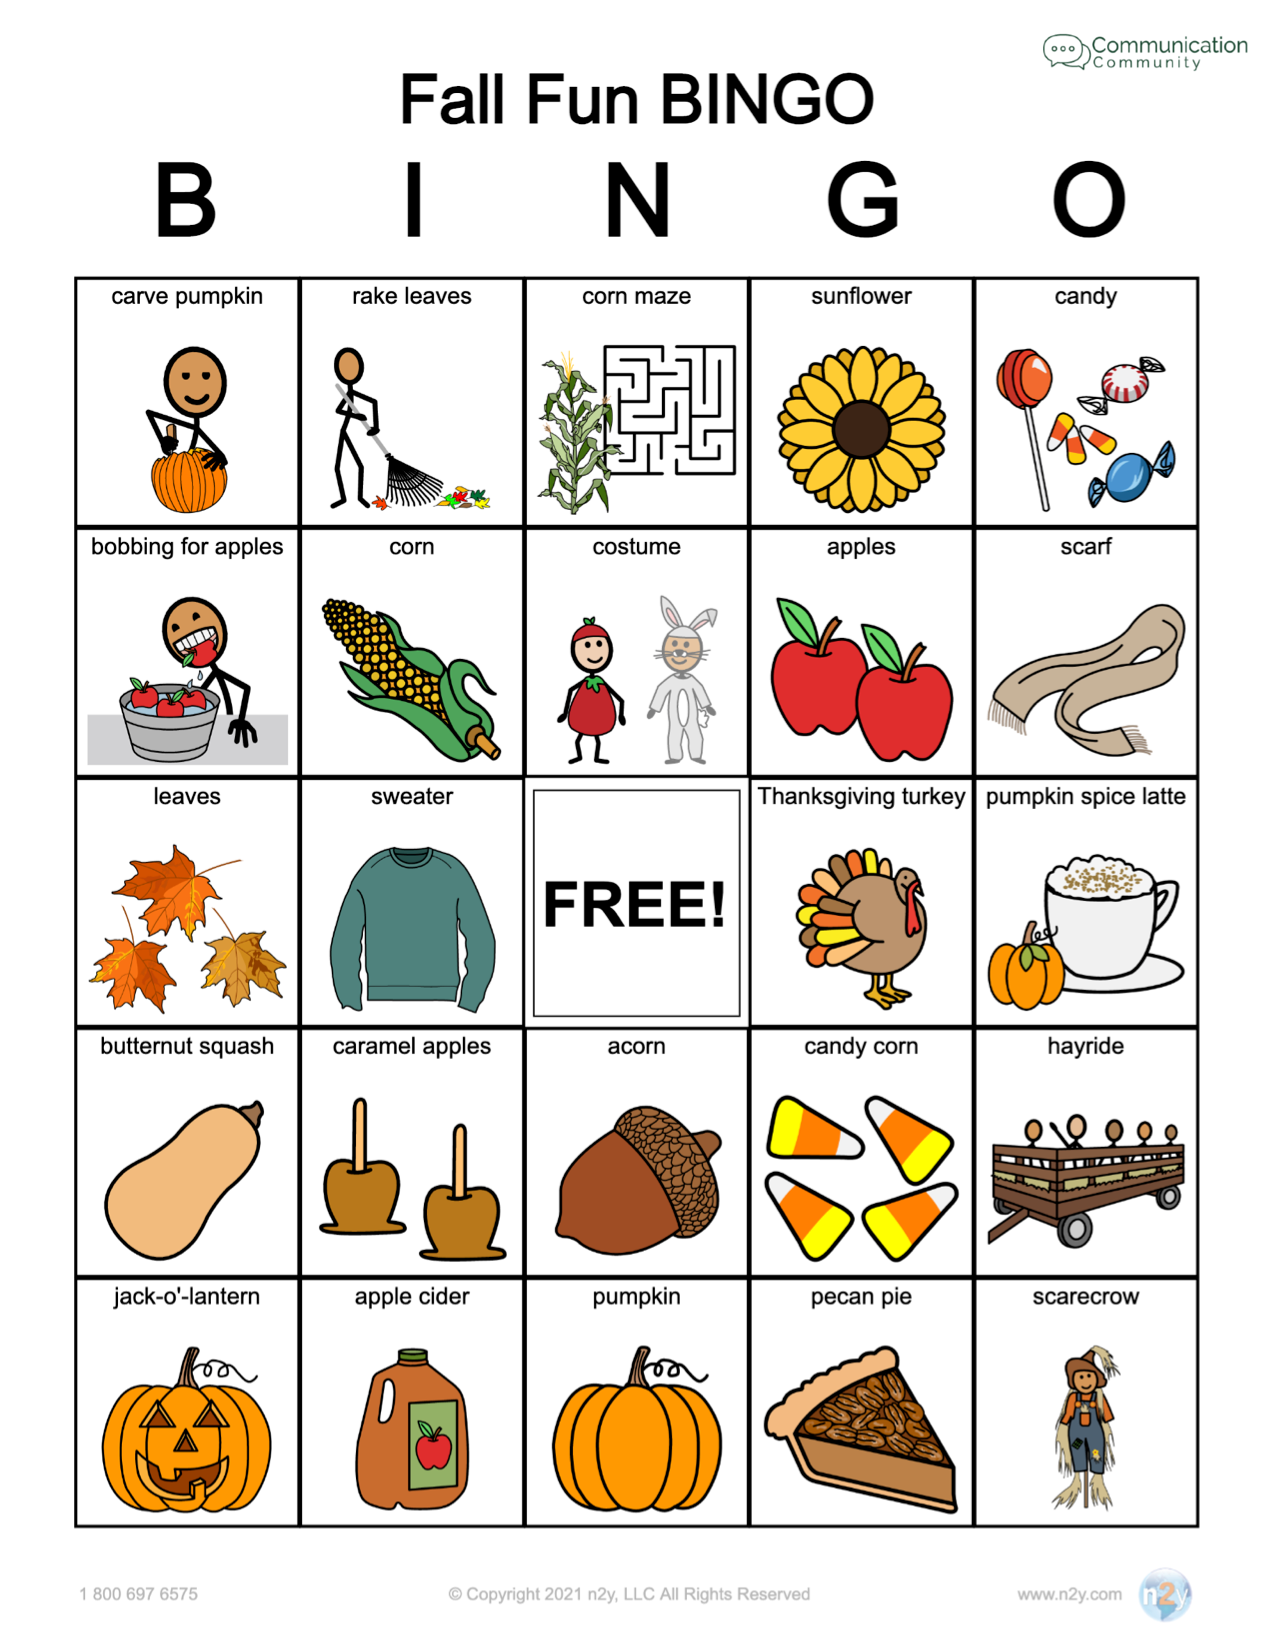 Bingo 2023 - Free Bingo Games,Bingo Games Free Download,Bingo